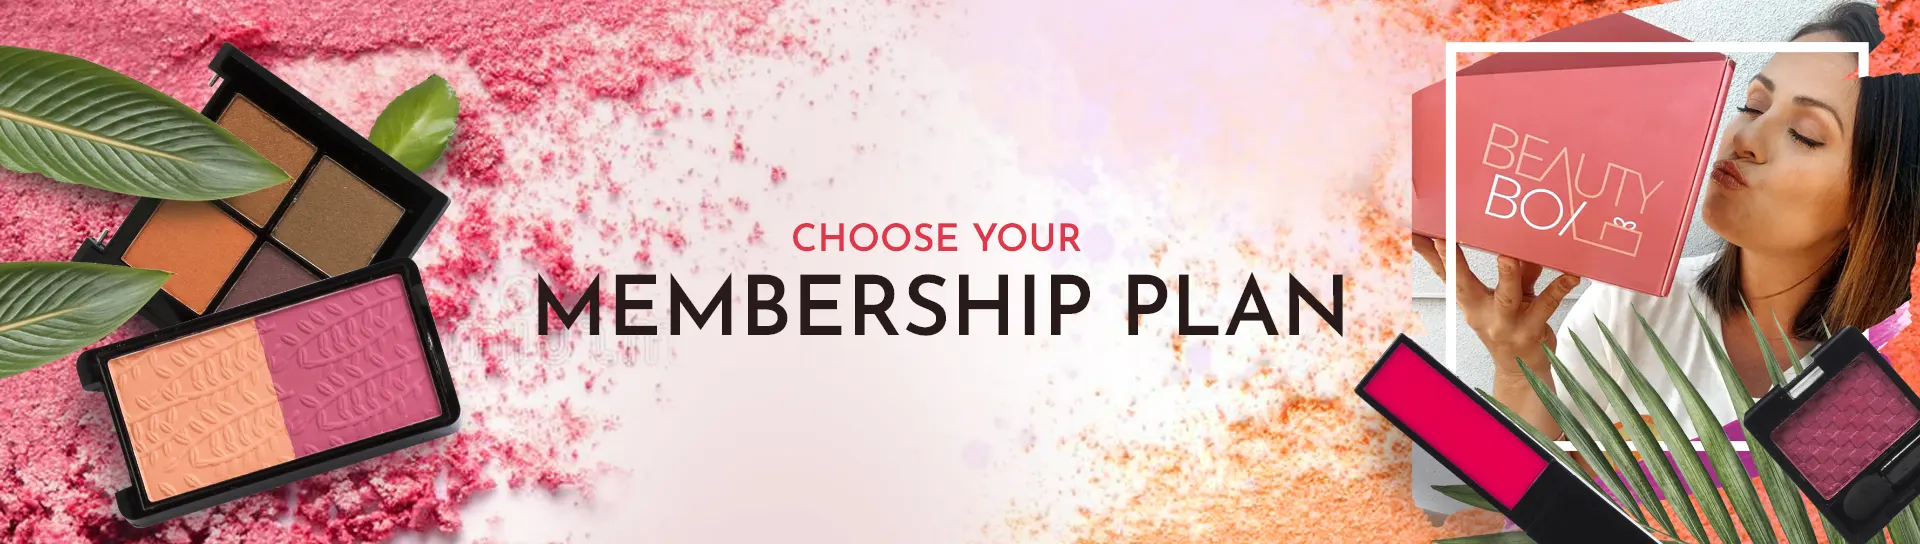 Choose Your Membership Plan